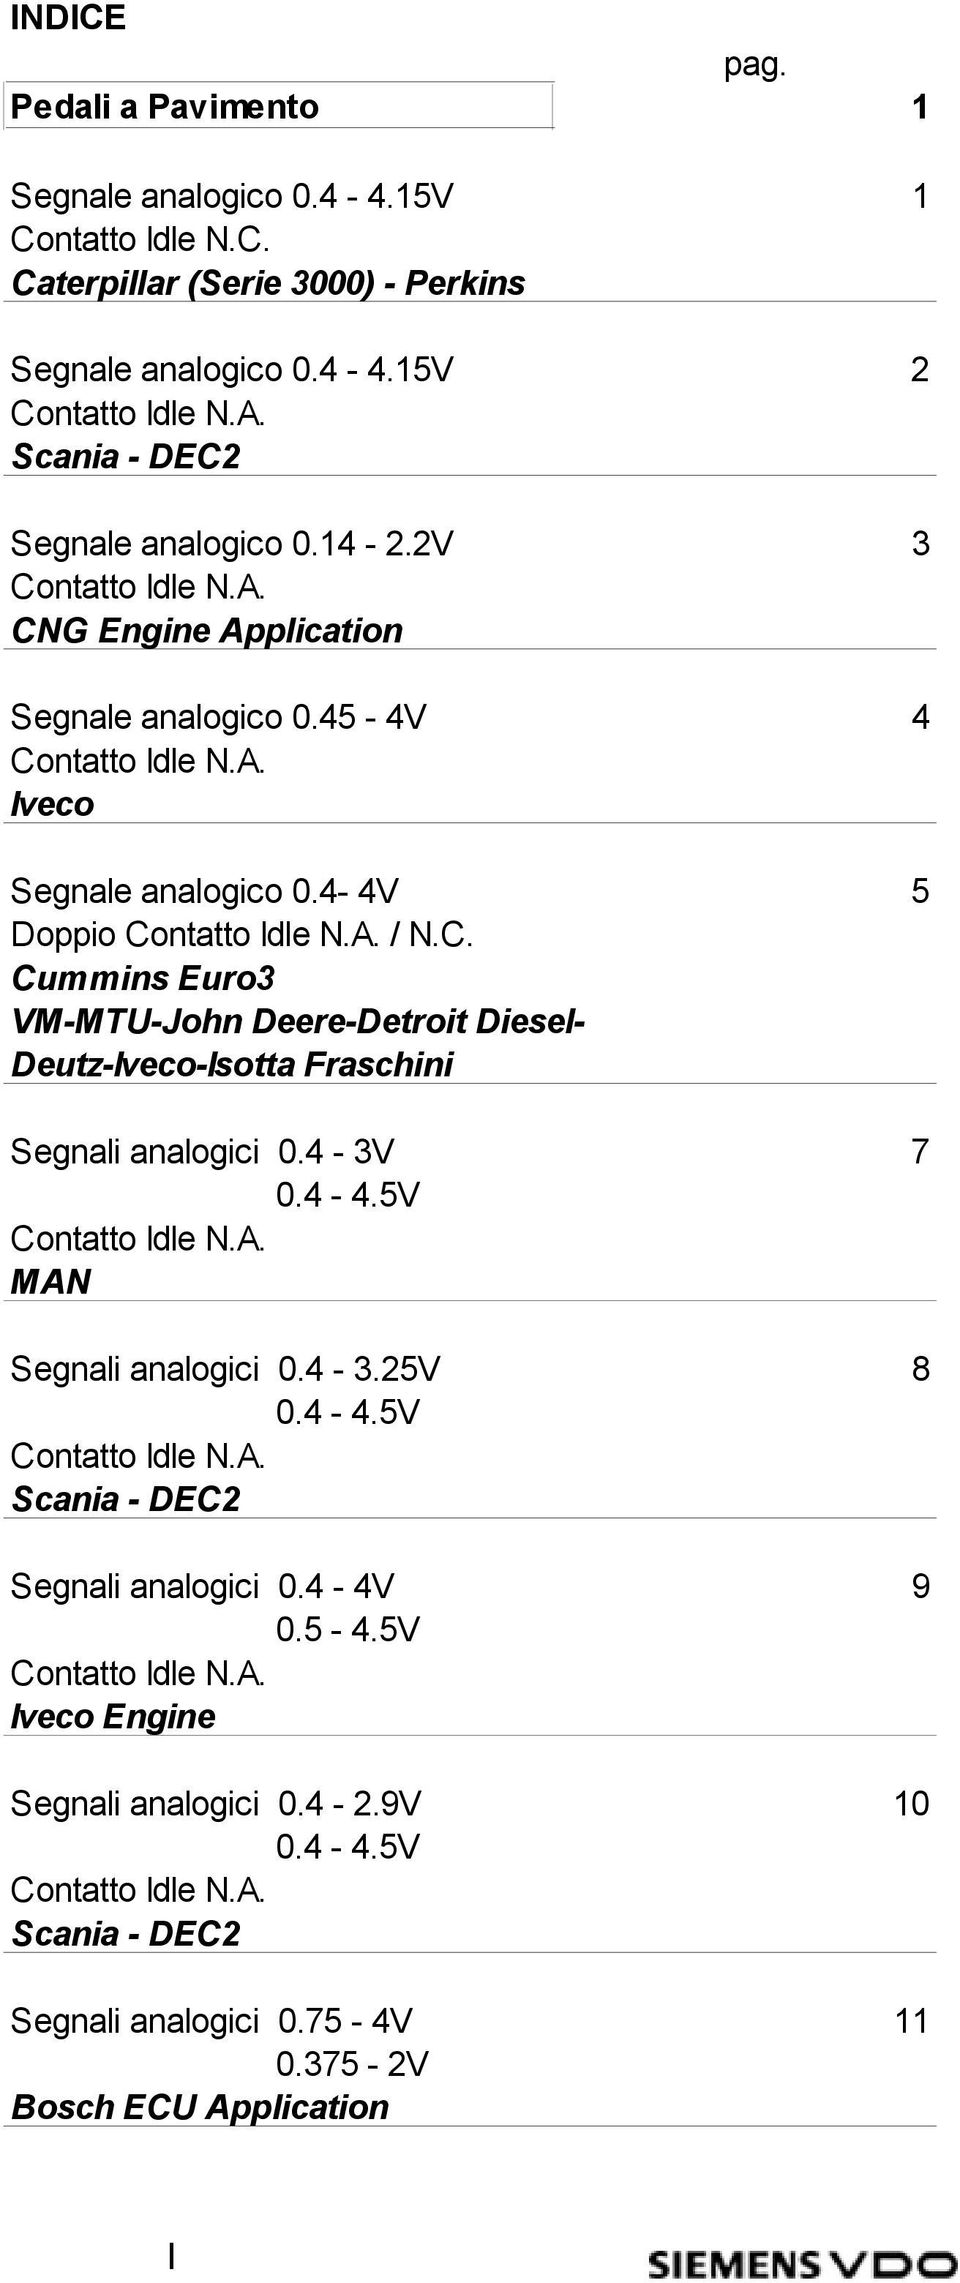 C. Cummins Euro3 VM-MTU-John Deere-Detroit Diesel- Deutz-Iveco-Isotta Fraschini Segnali analogici 0.4-3V 7 0.4-4.5V Contatto Idle N.A. MAN Segnali analogici 0.4-3.25V 8 0.4-4.5V Contatto Idle N.A. Scania - DEC2 Segnali analogici 0.